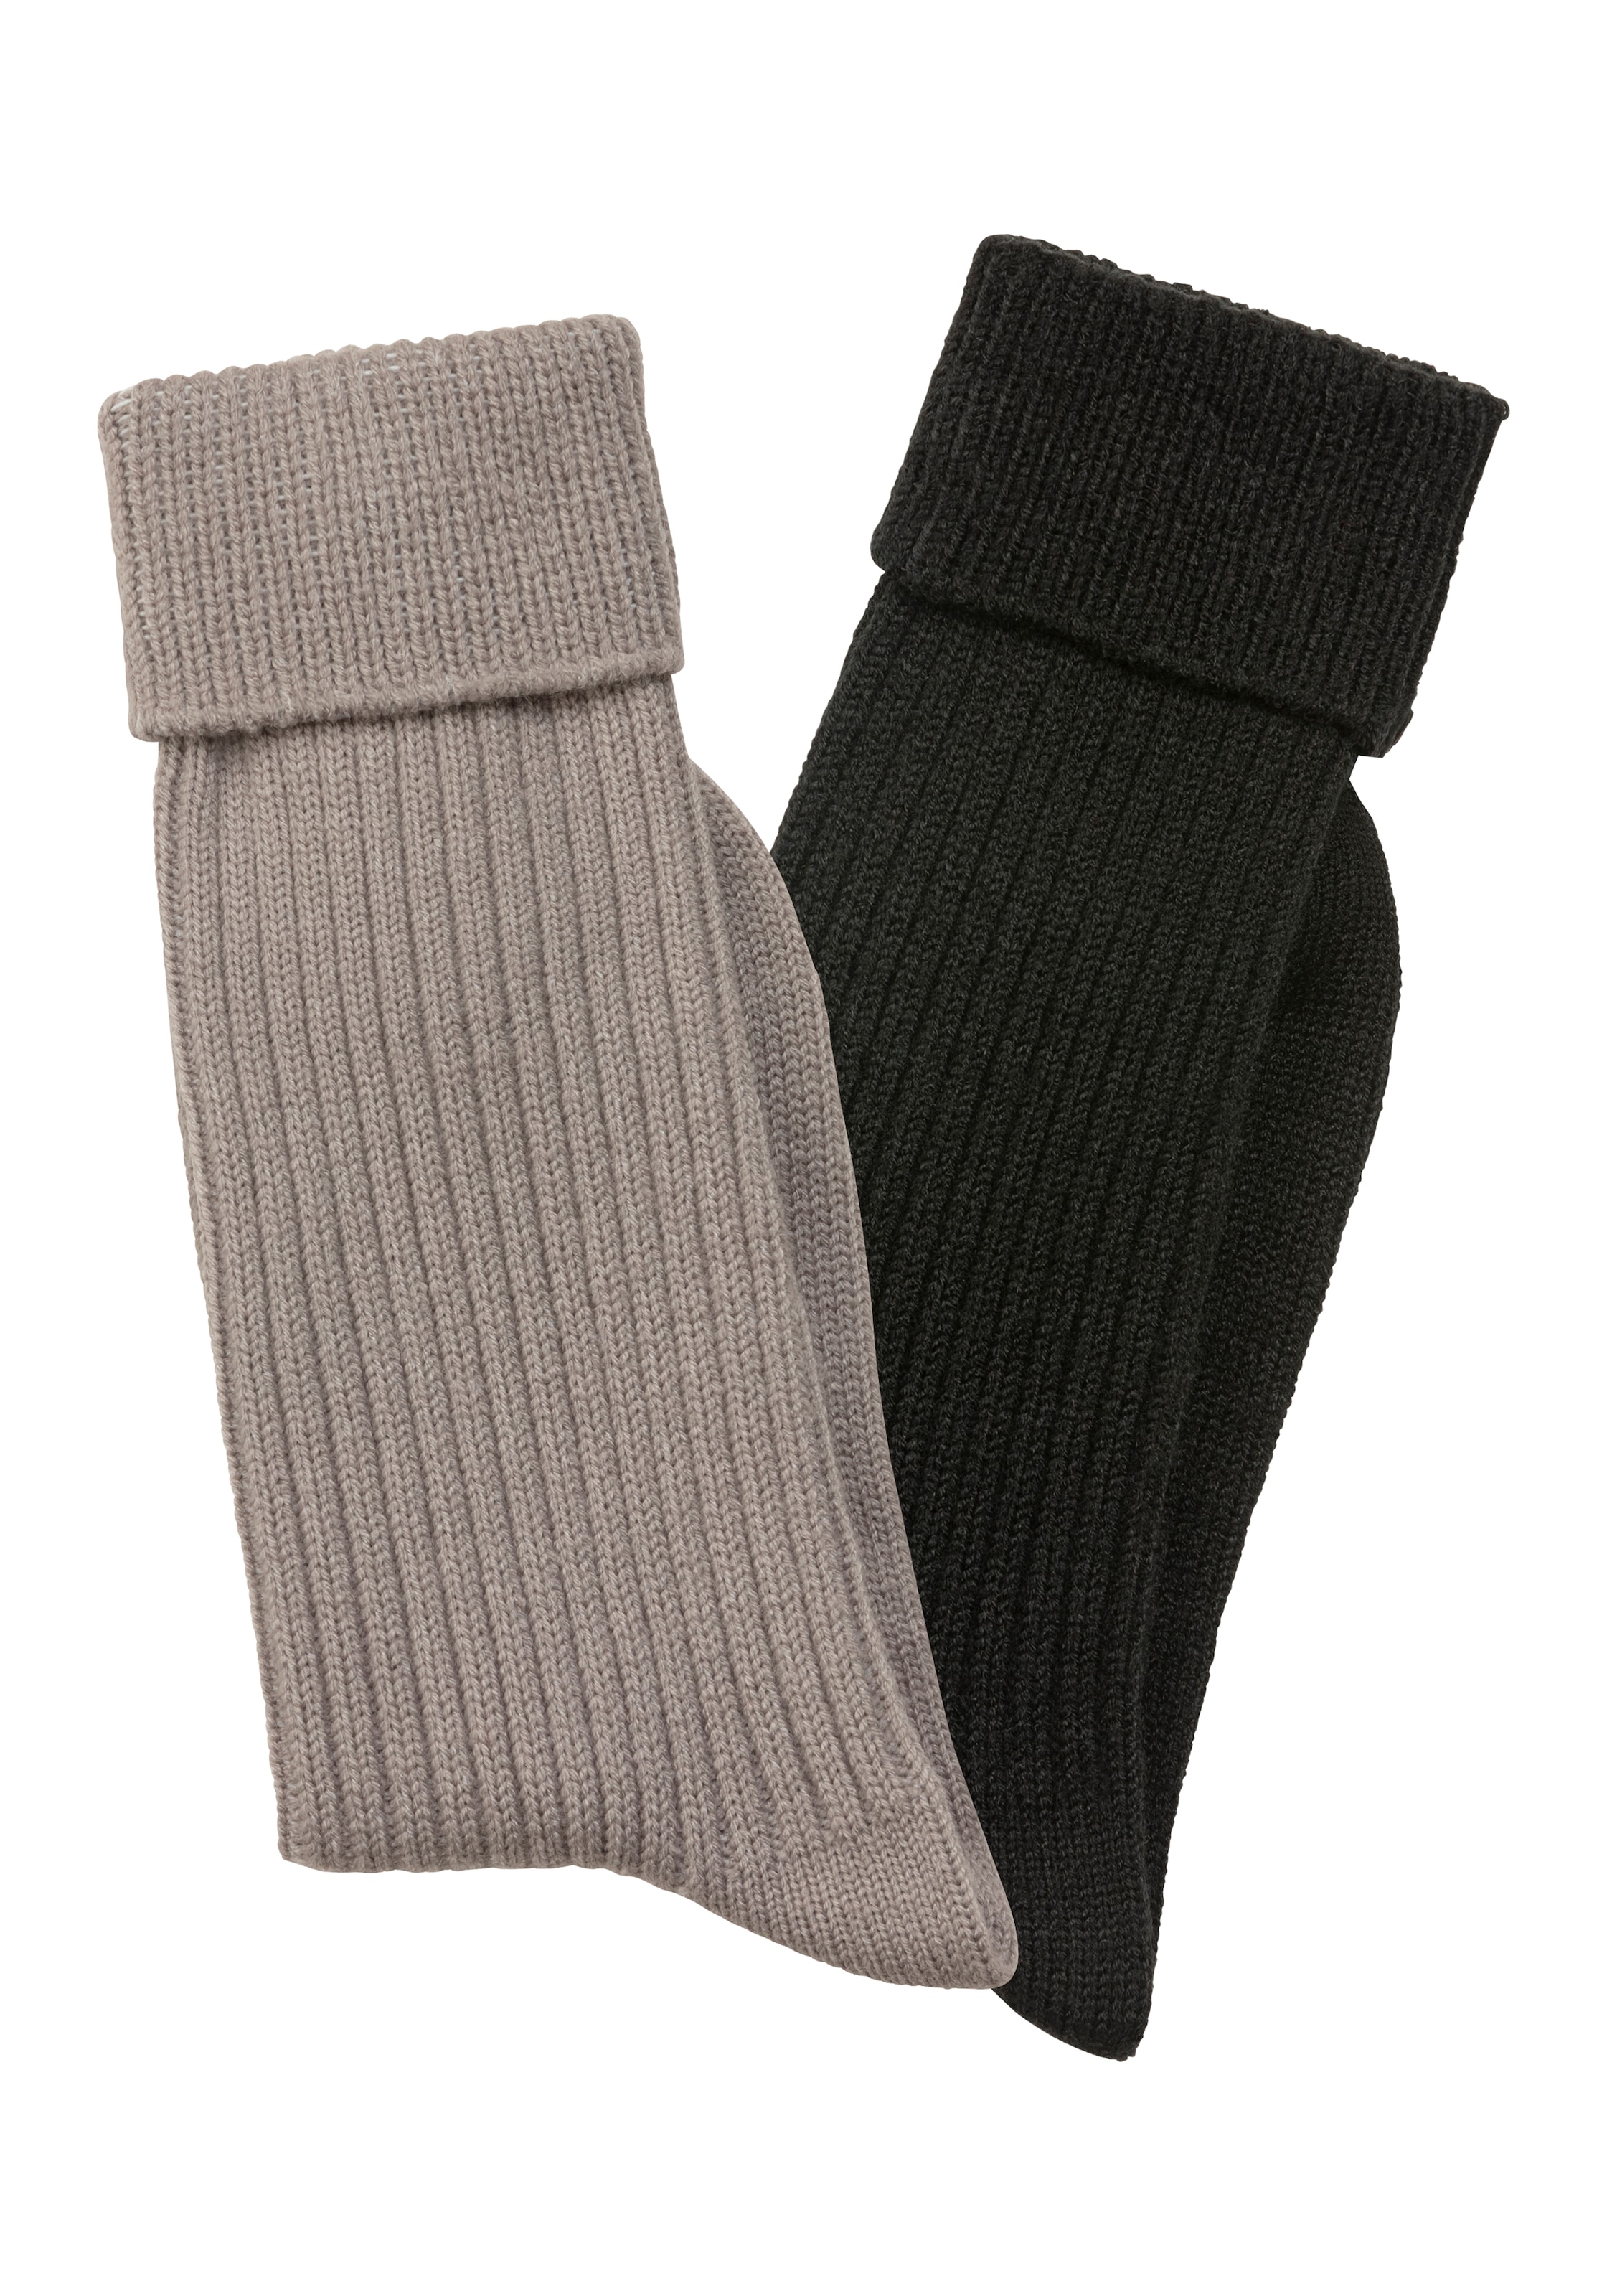 Black Friday Lavana Socken, (2 Paar), in modischem Rippstrick | BAUR